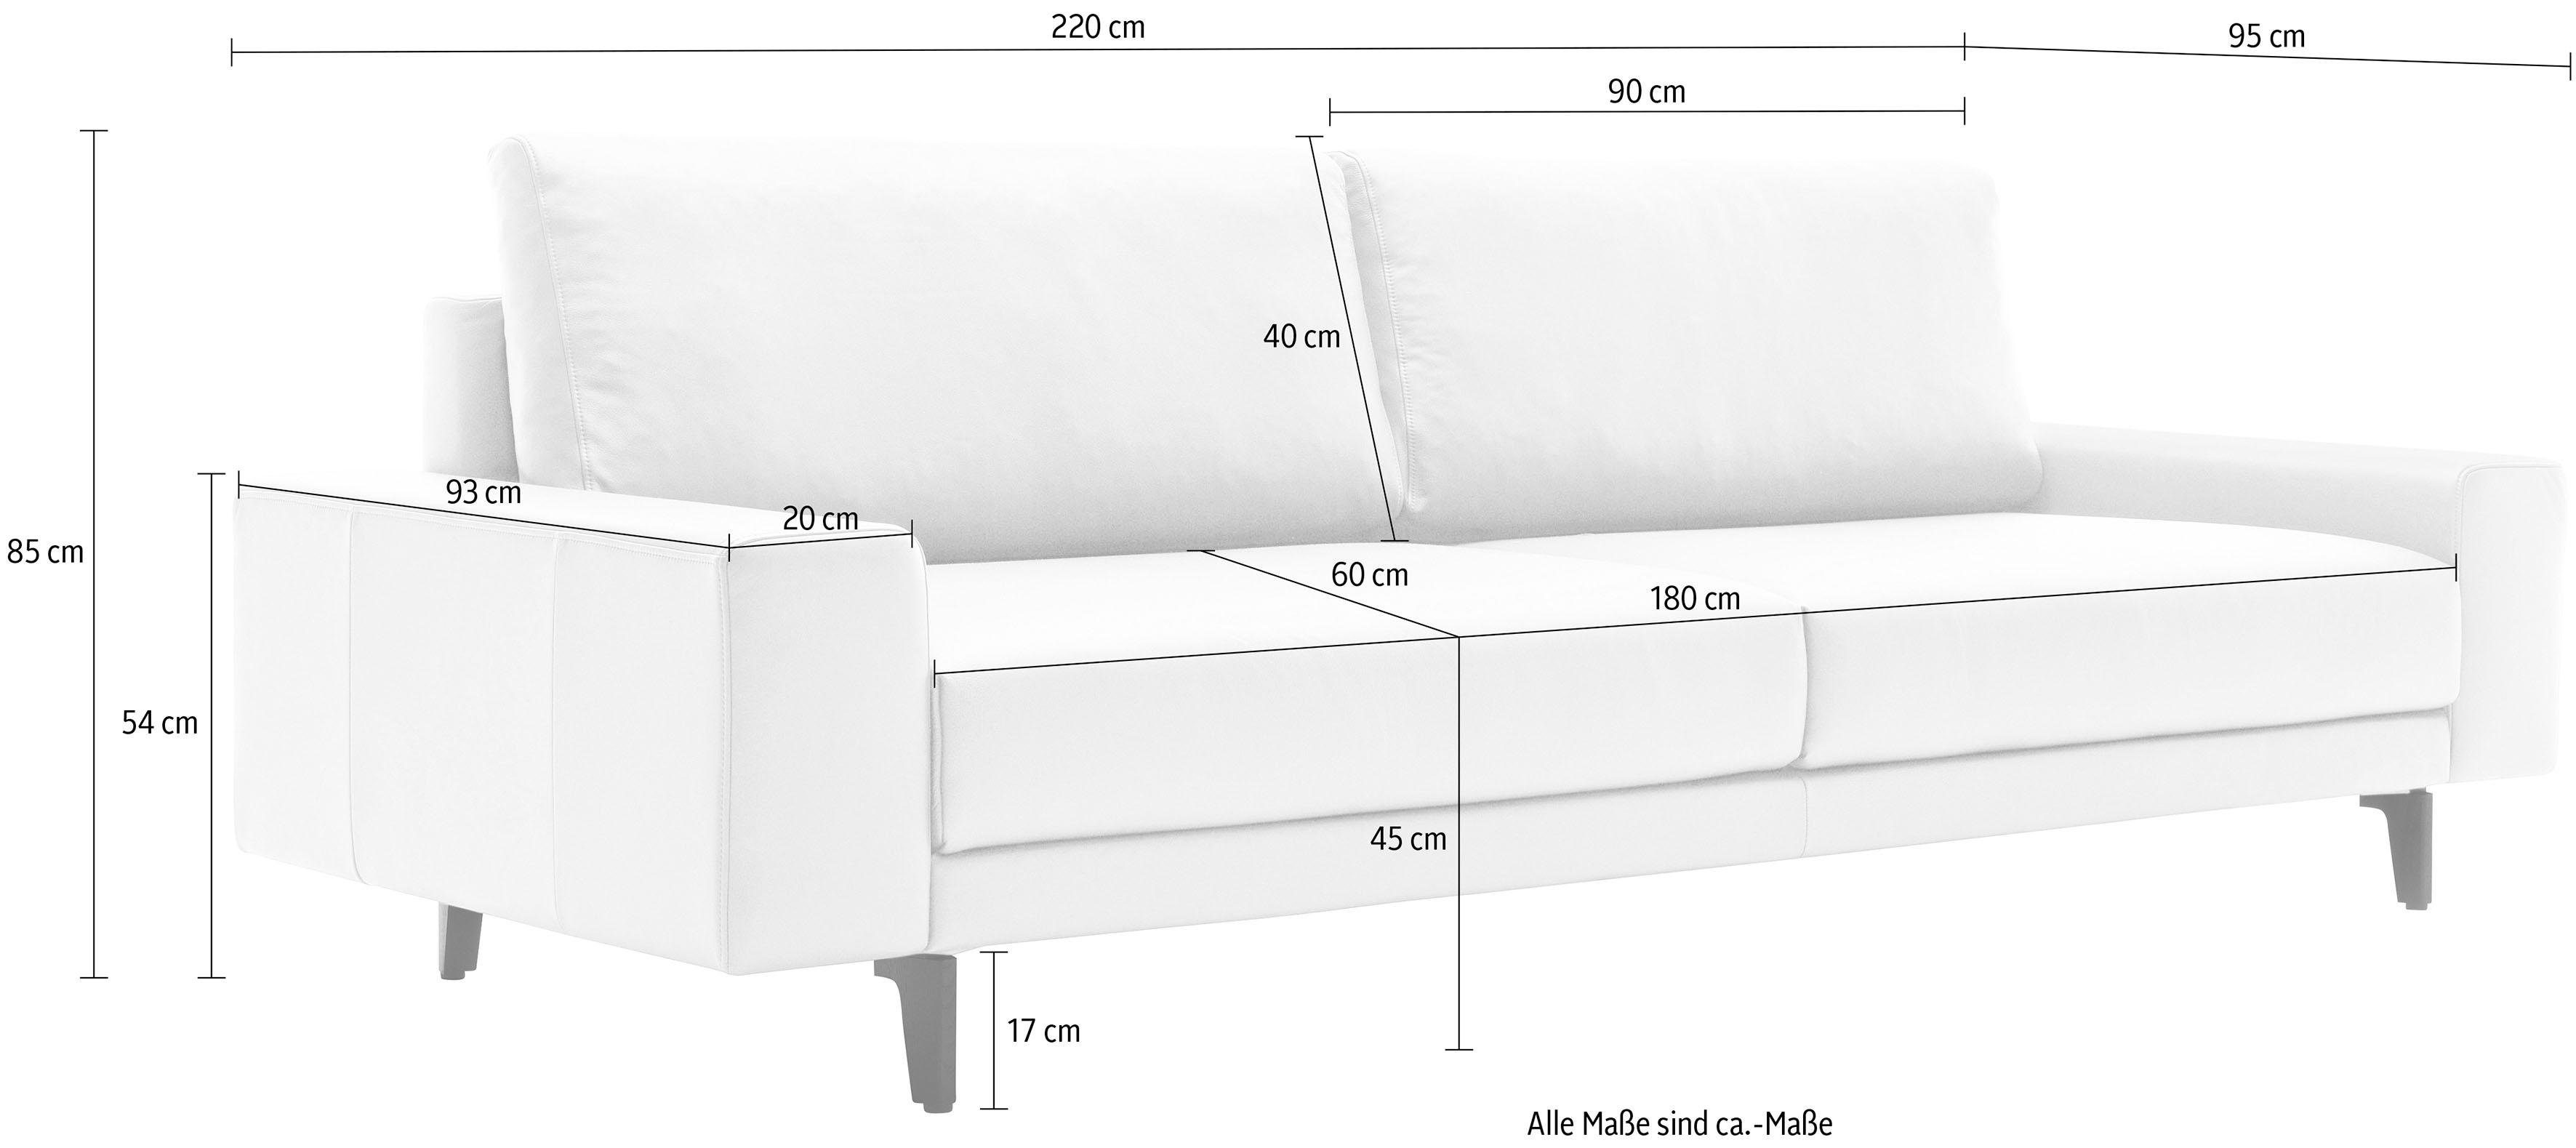 niedrig, hs.450, sofa Alugussfüße Armlehne Breite 3-Sitzer cm 220 hülsta in umbragrau, breit